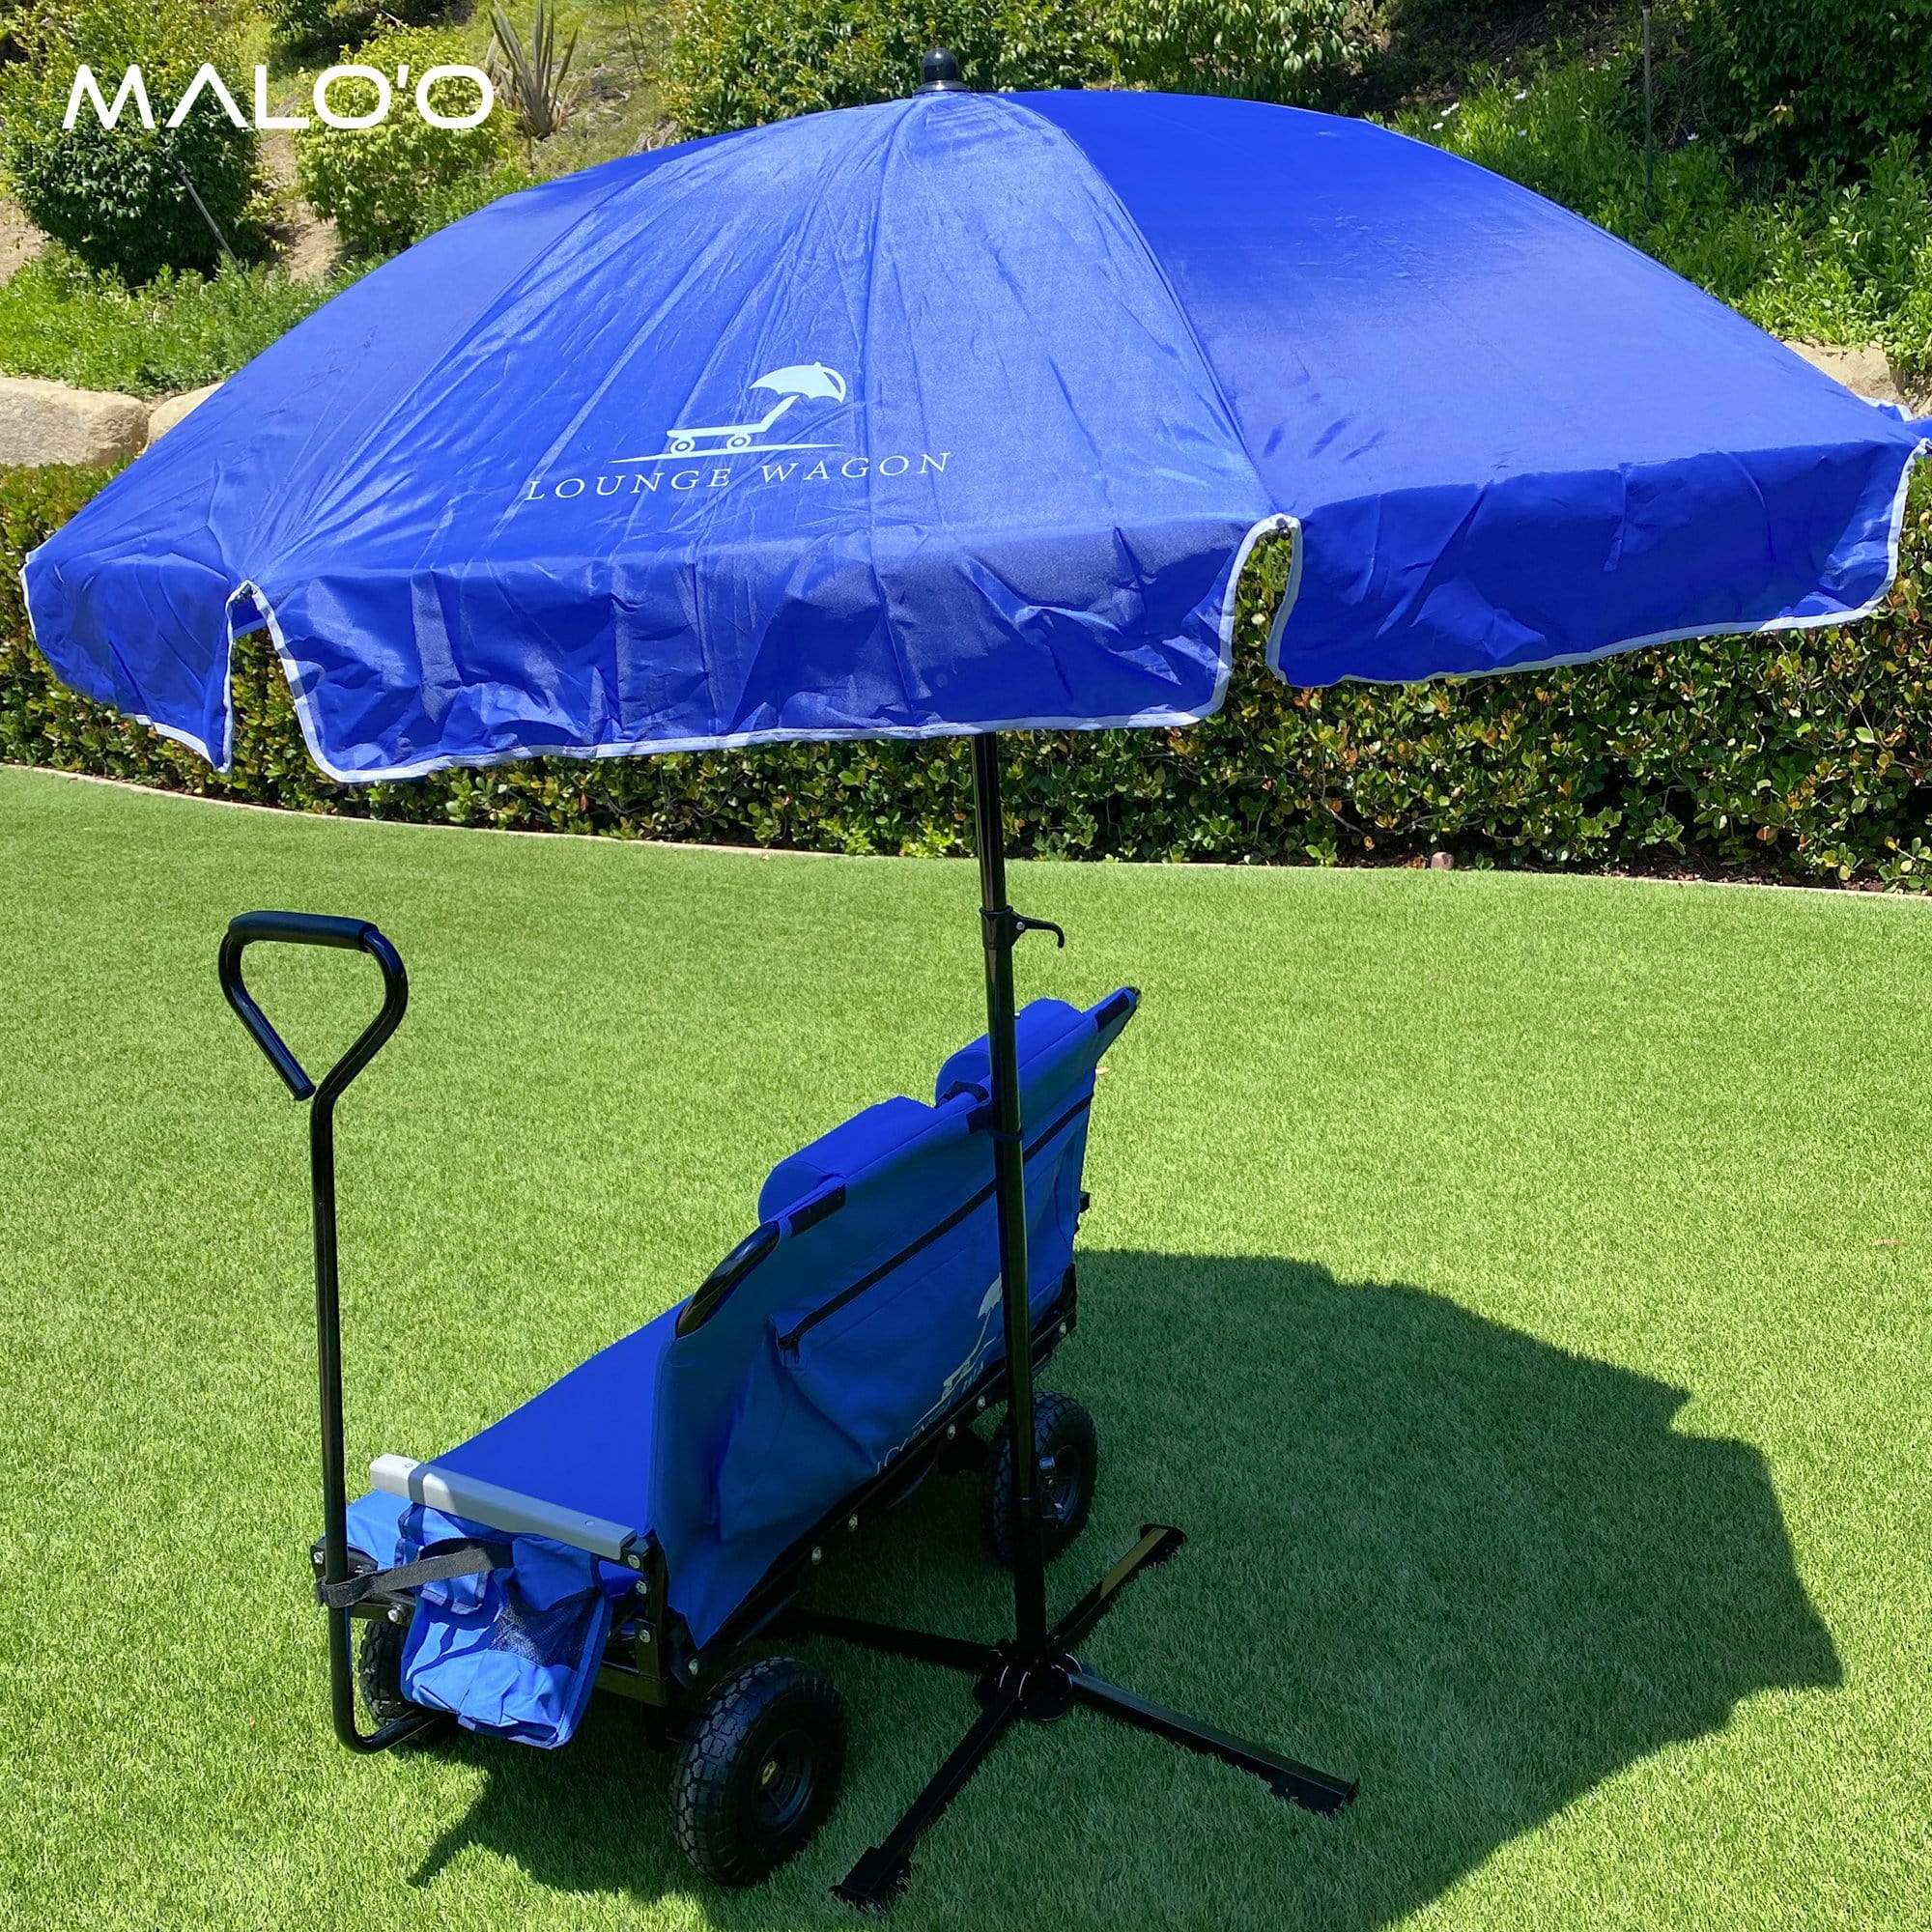 Malo&#39;o Racks Lounge Wagon Round Beach Umbrella